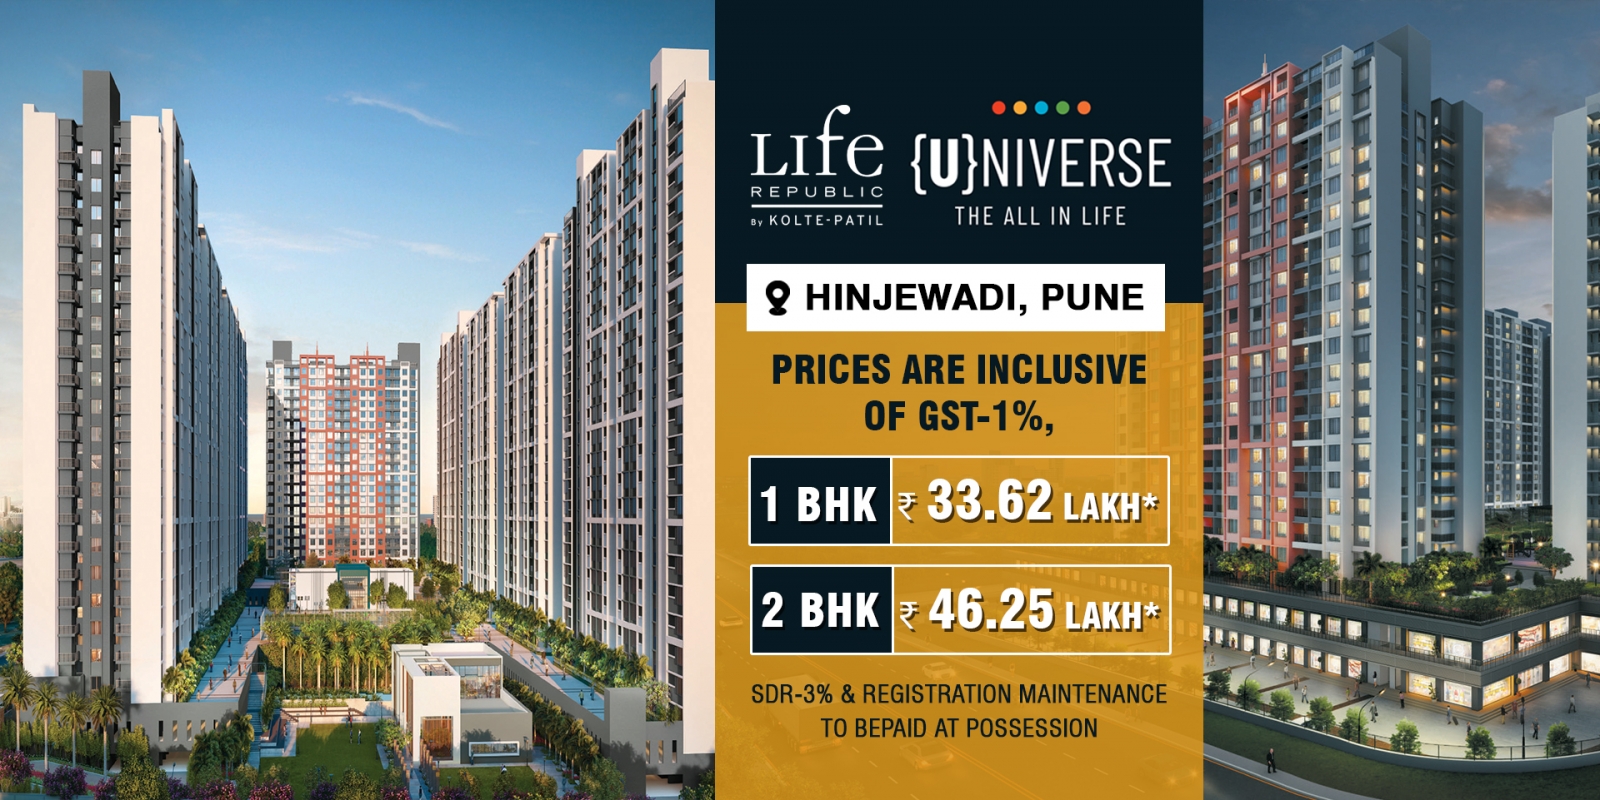 Kolte Patil Life Republic Universe Pune-KOLTE PATIL LIFE REPUBLIC UNIVERSE.jpg